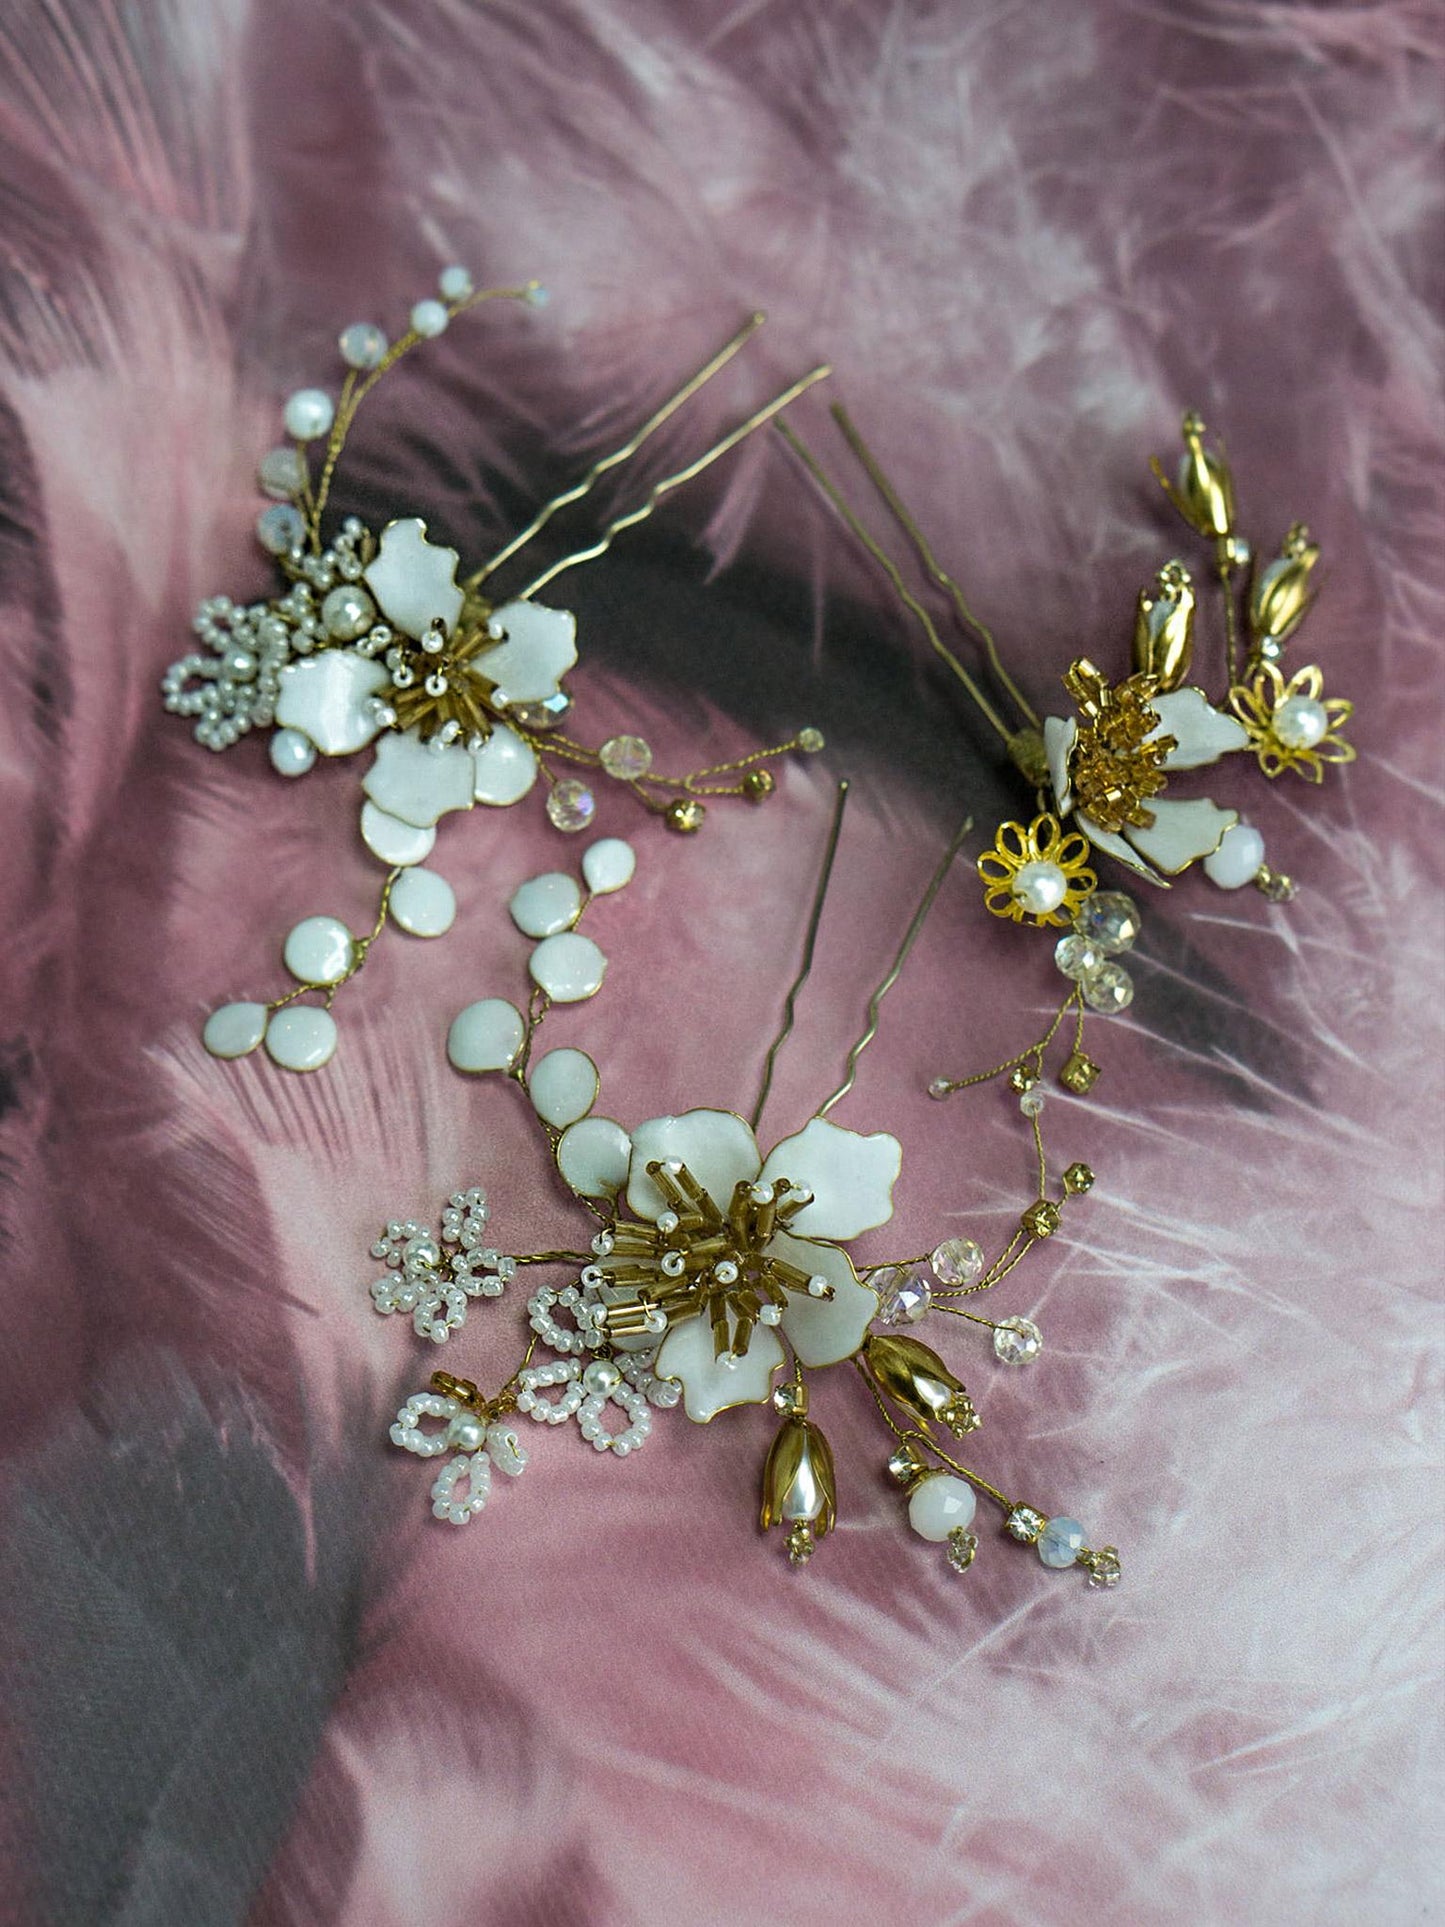 Three gold flower hair pins arranged on a white surface